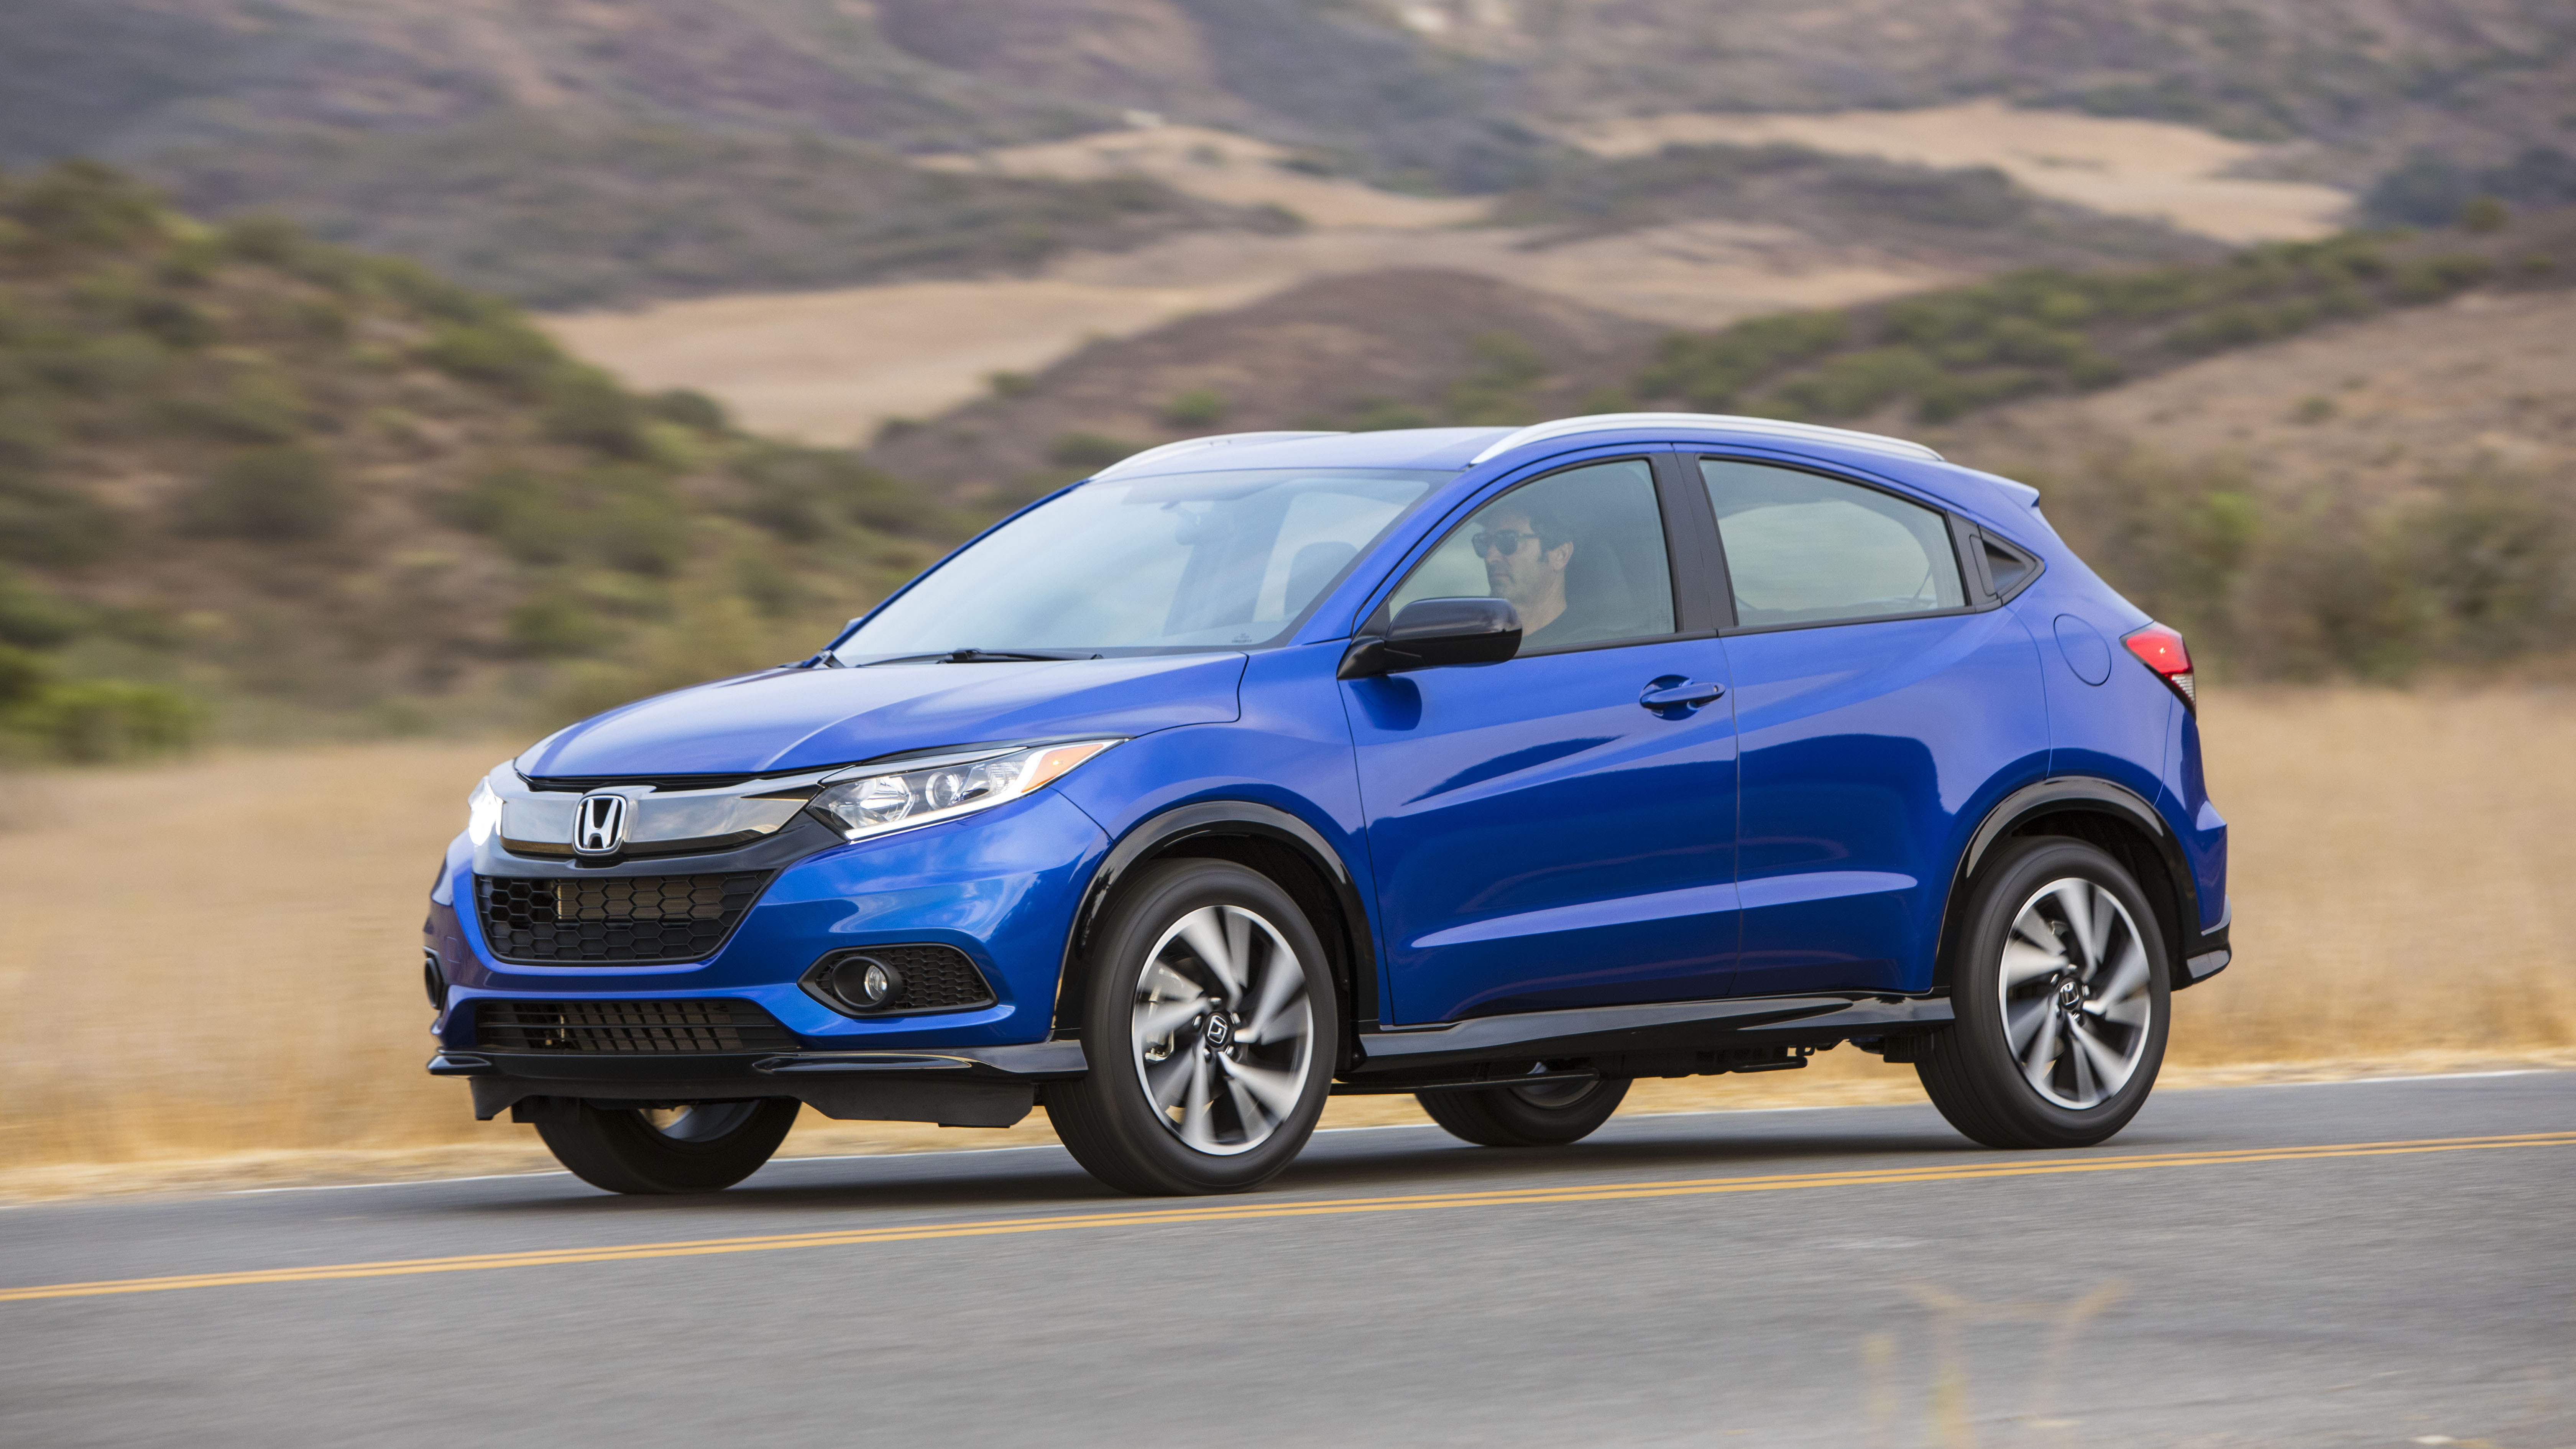 Honda recalls 115,000 Fit and HRV models over rear camera operation